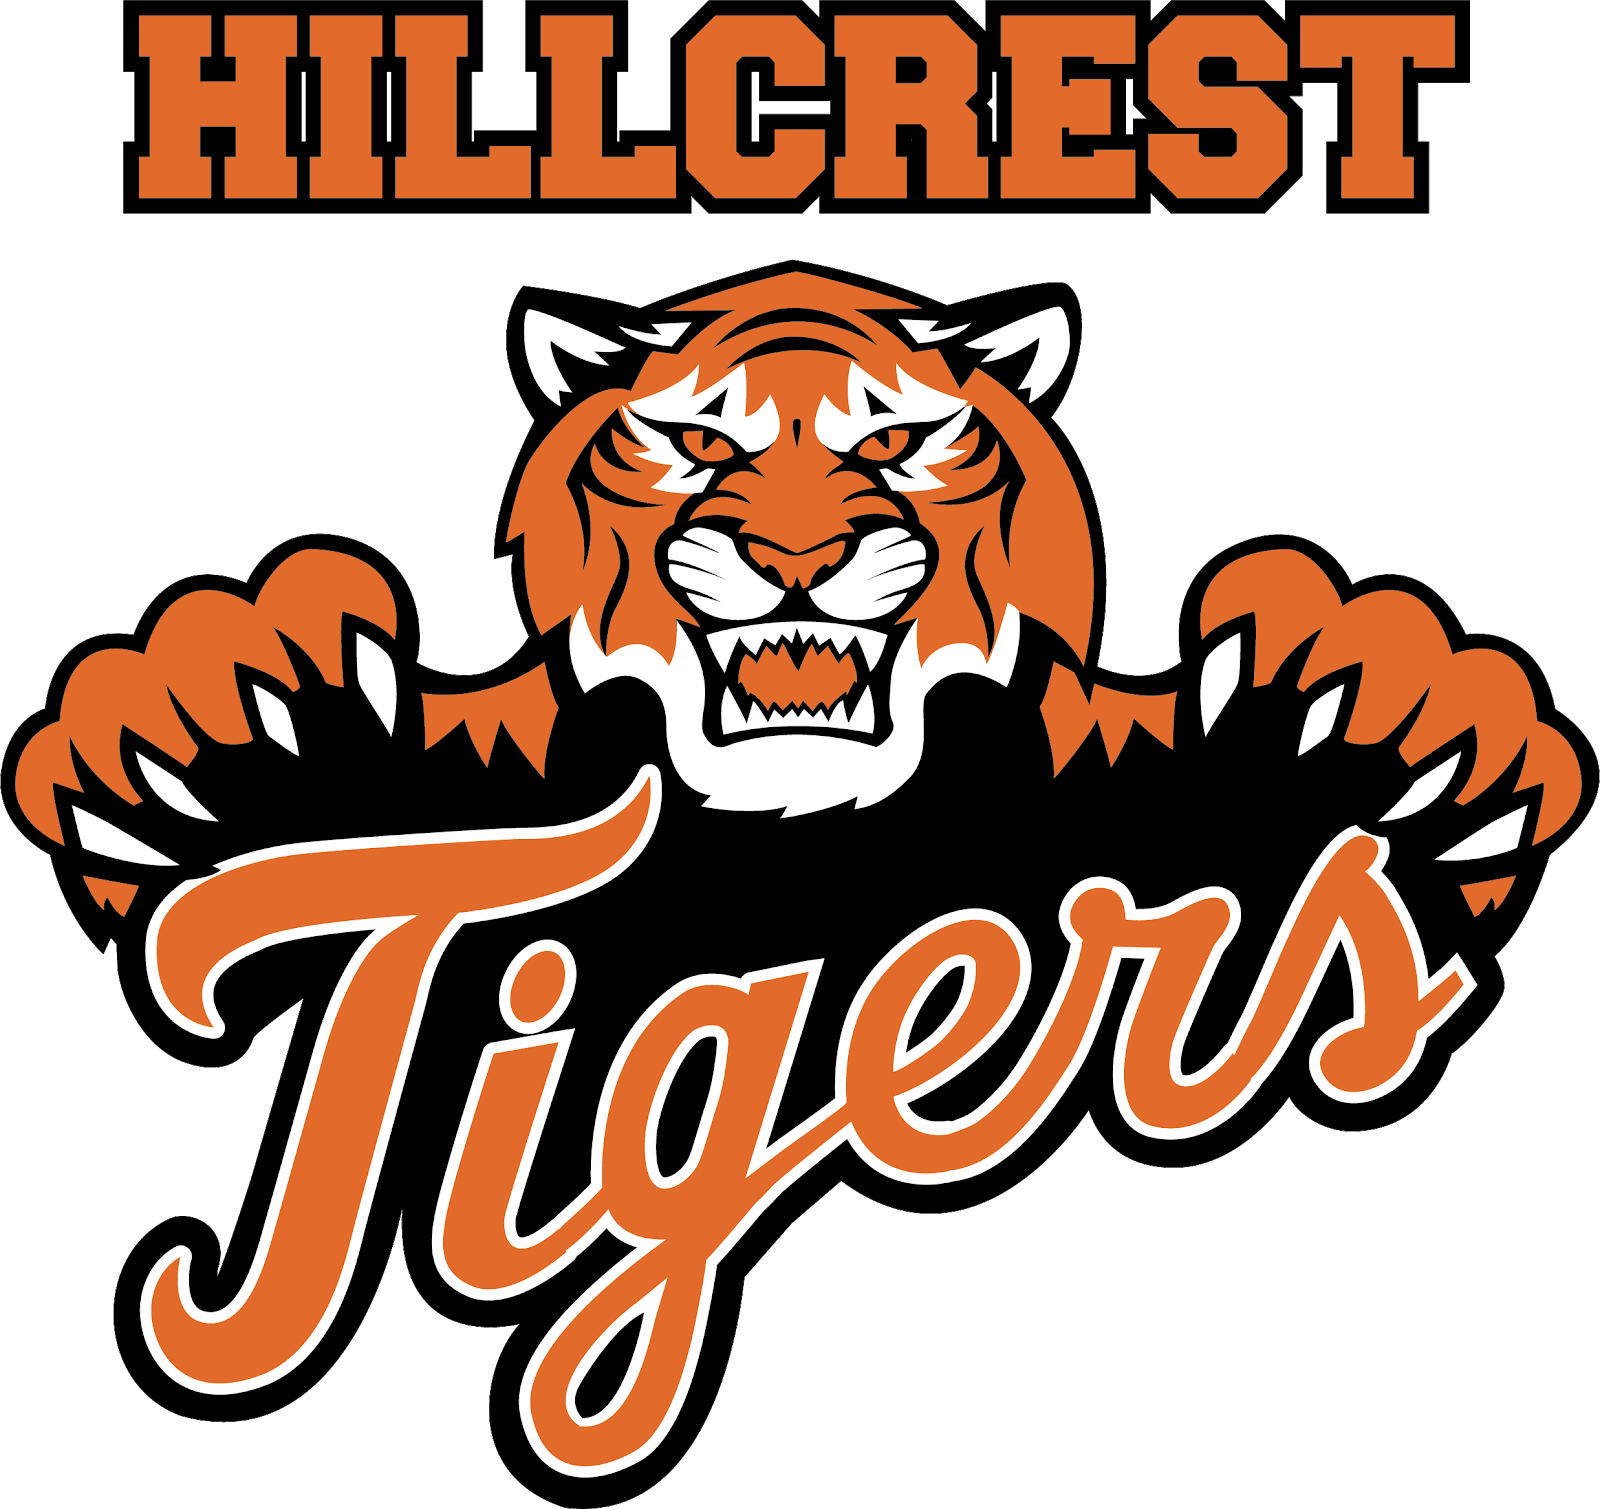 Hillcrest Tigers - Logo 1